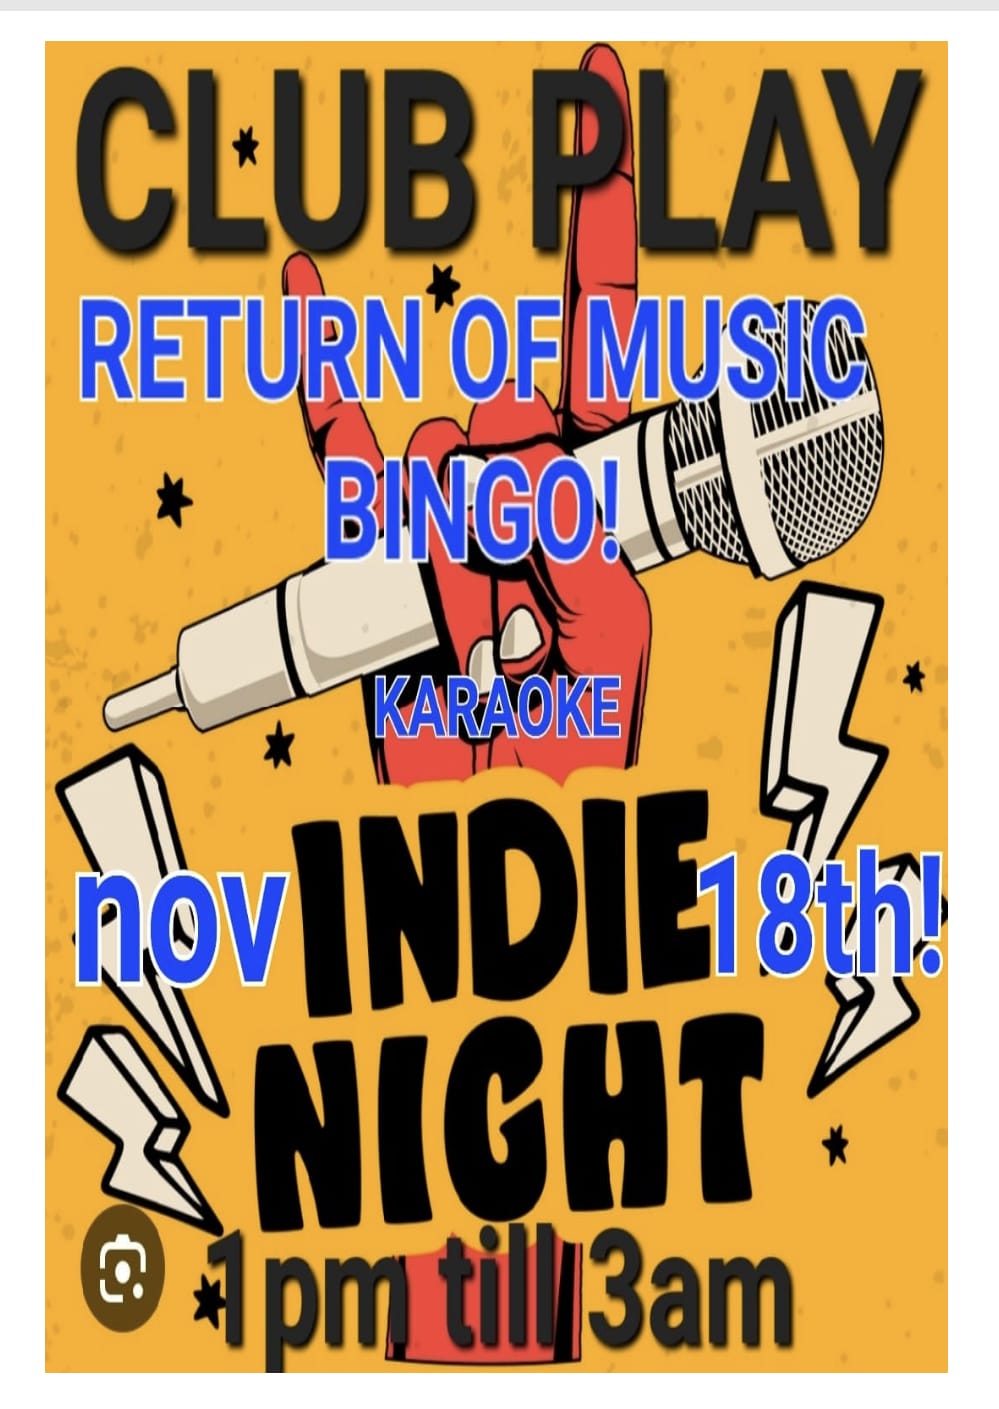 THE BIG INDIE BINGO NIGHT club play 18th November 1pm till 3am karaoke and music bingo is back!